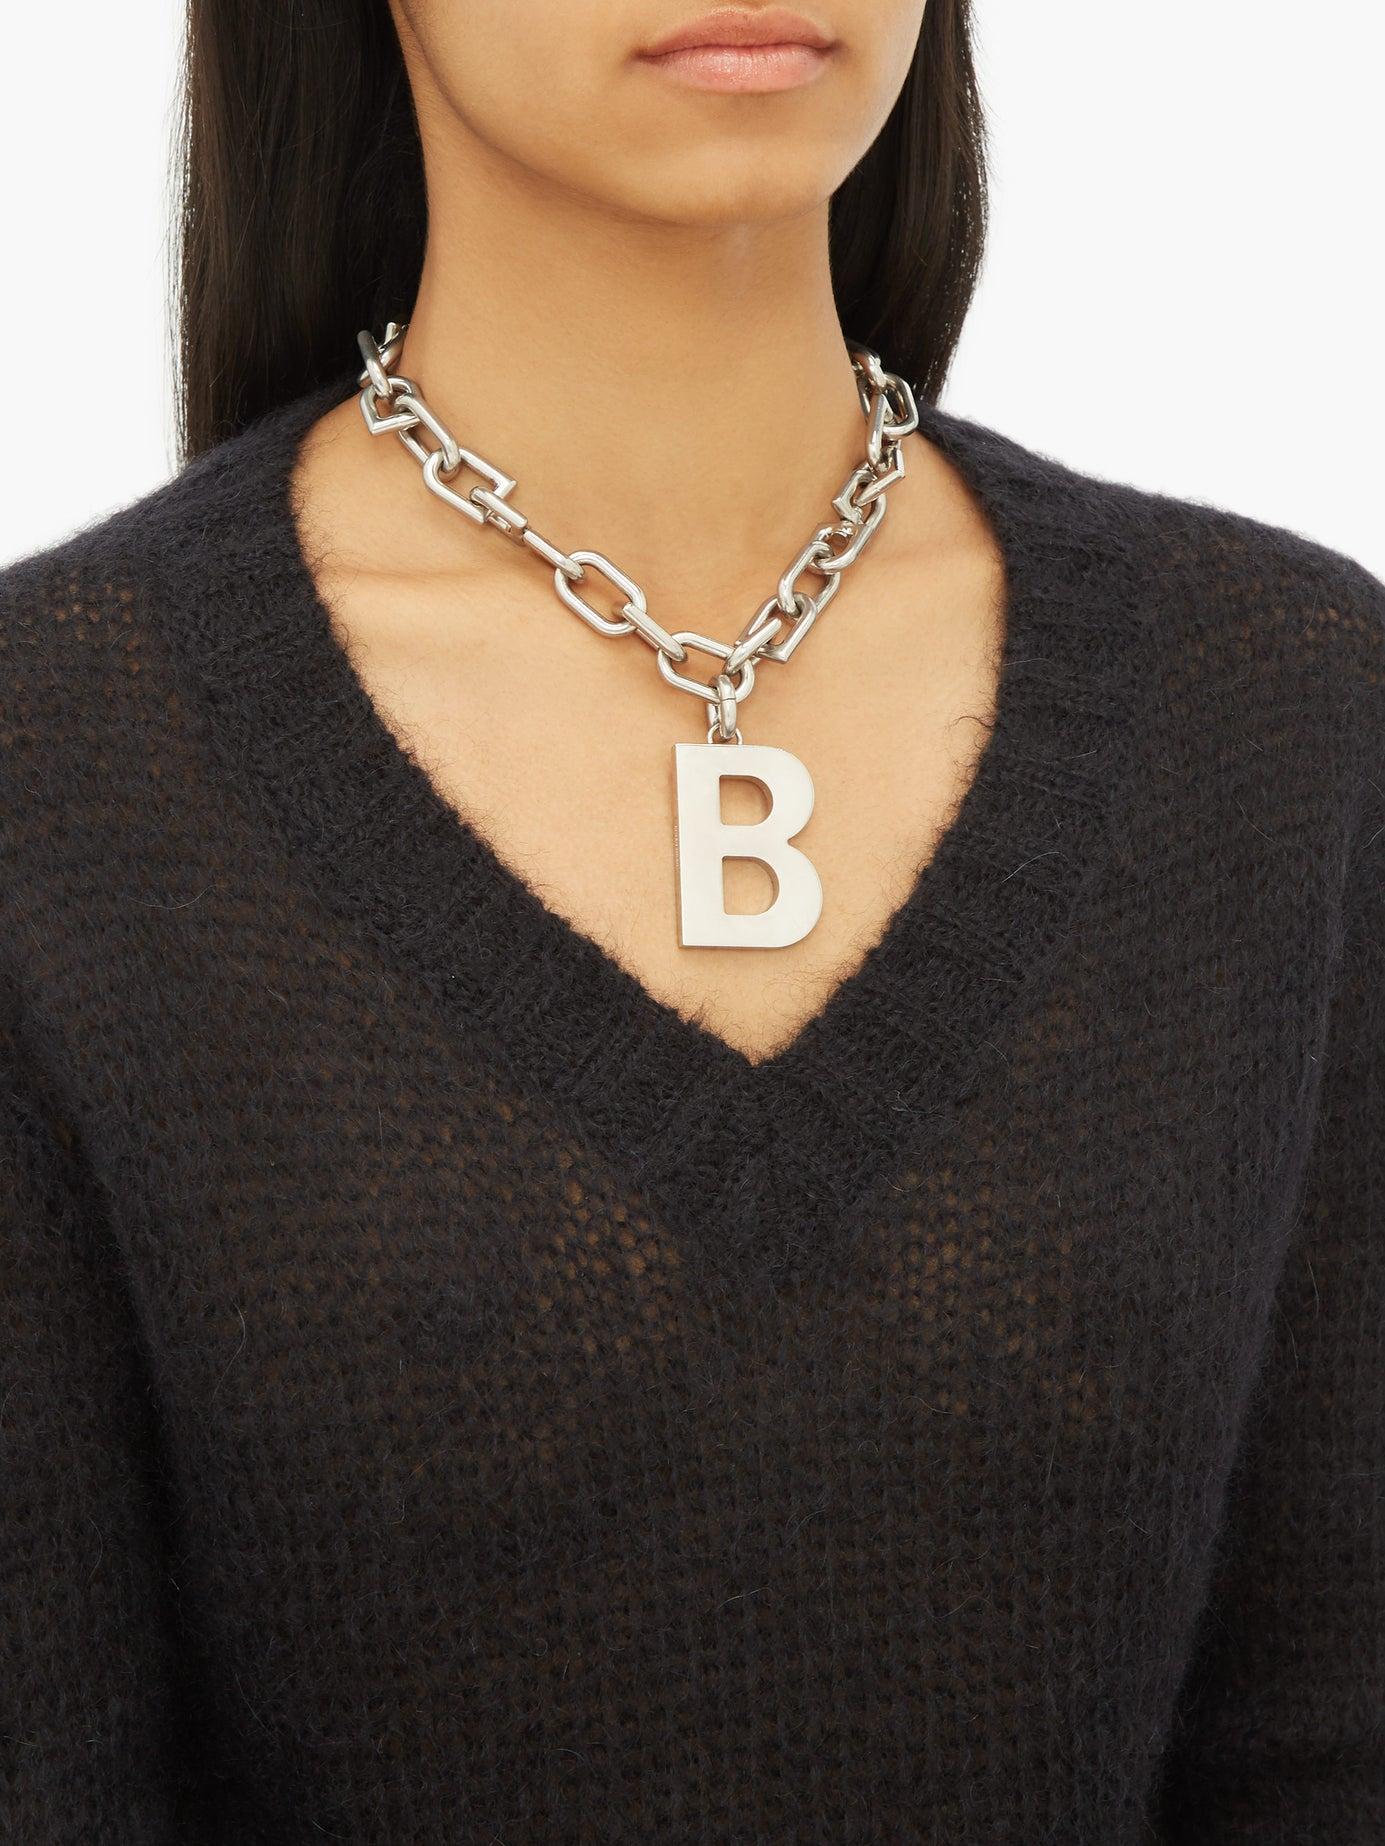 Balenciaga B-logo Chain Necklace in Metallic | Lyst